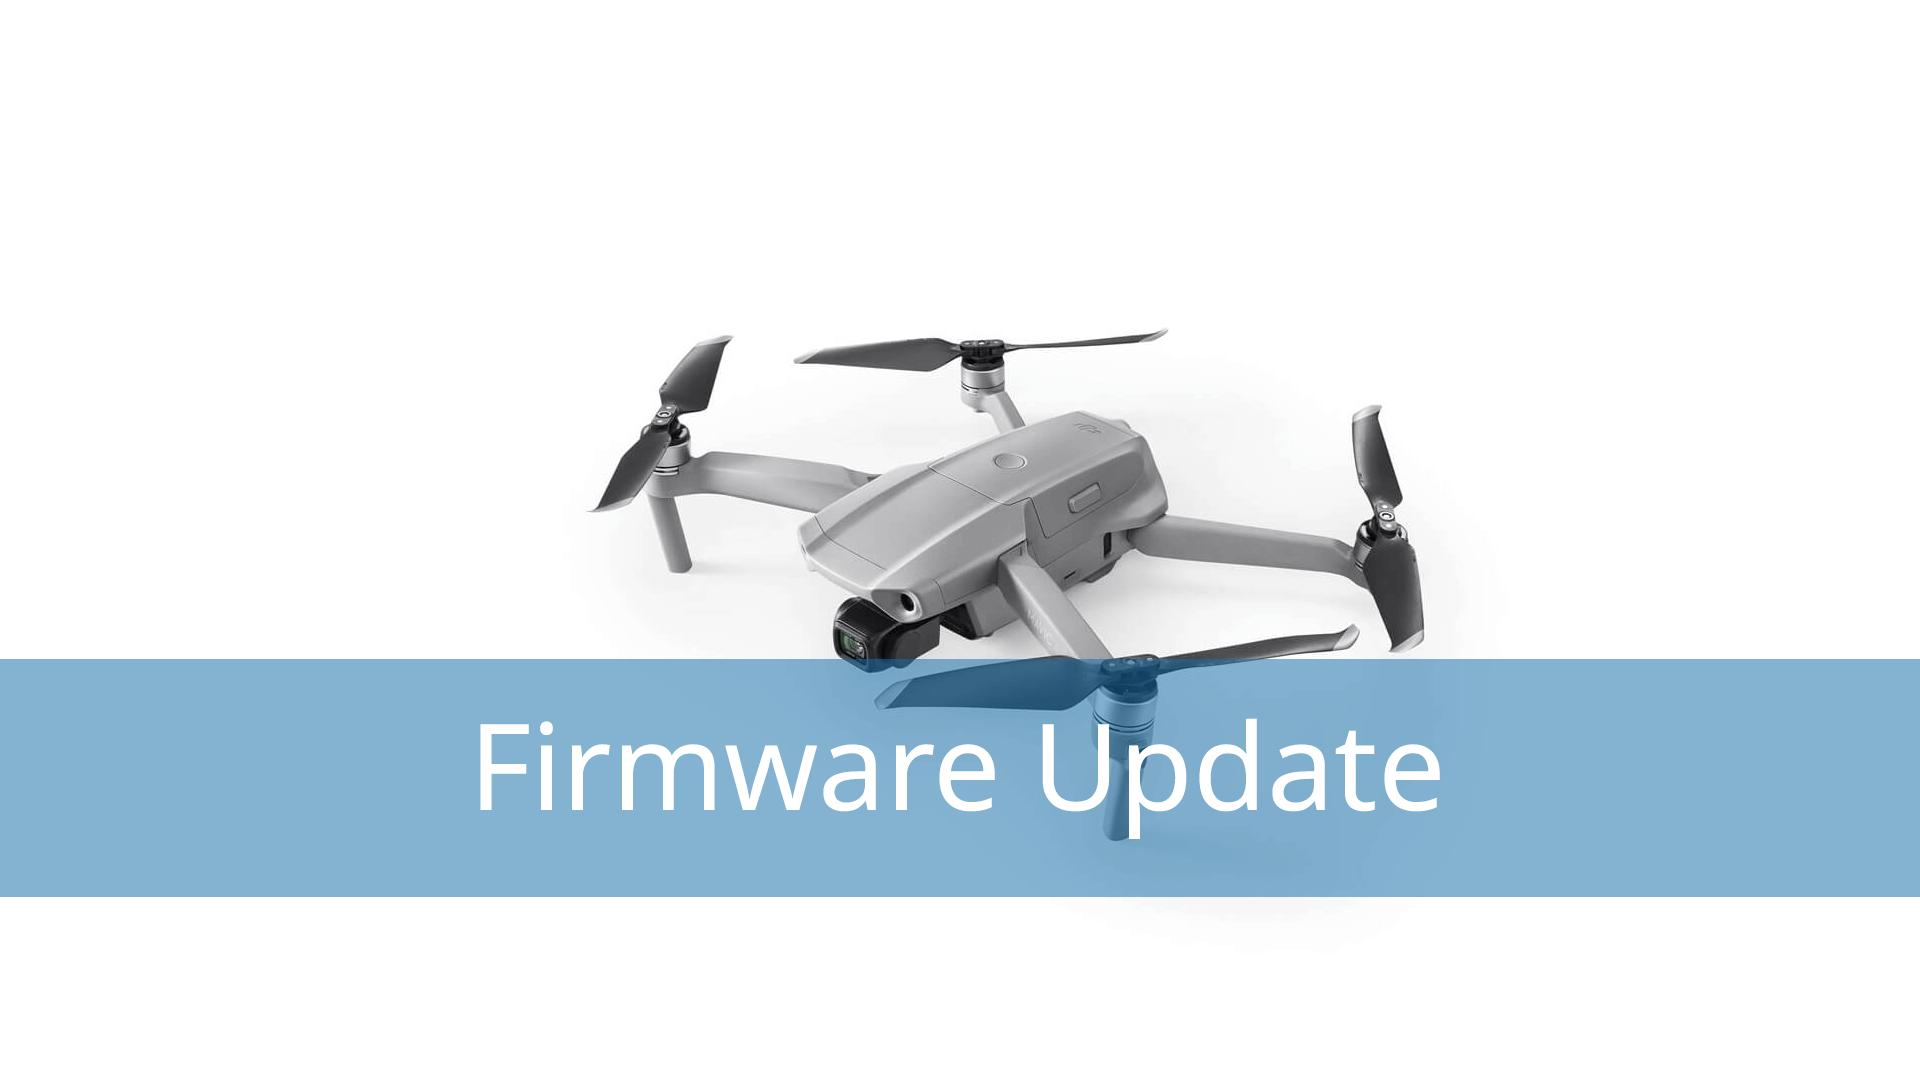 Mavic Air 2 Firmware Update